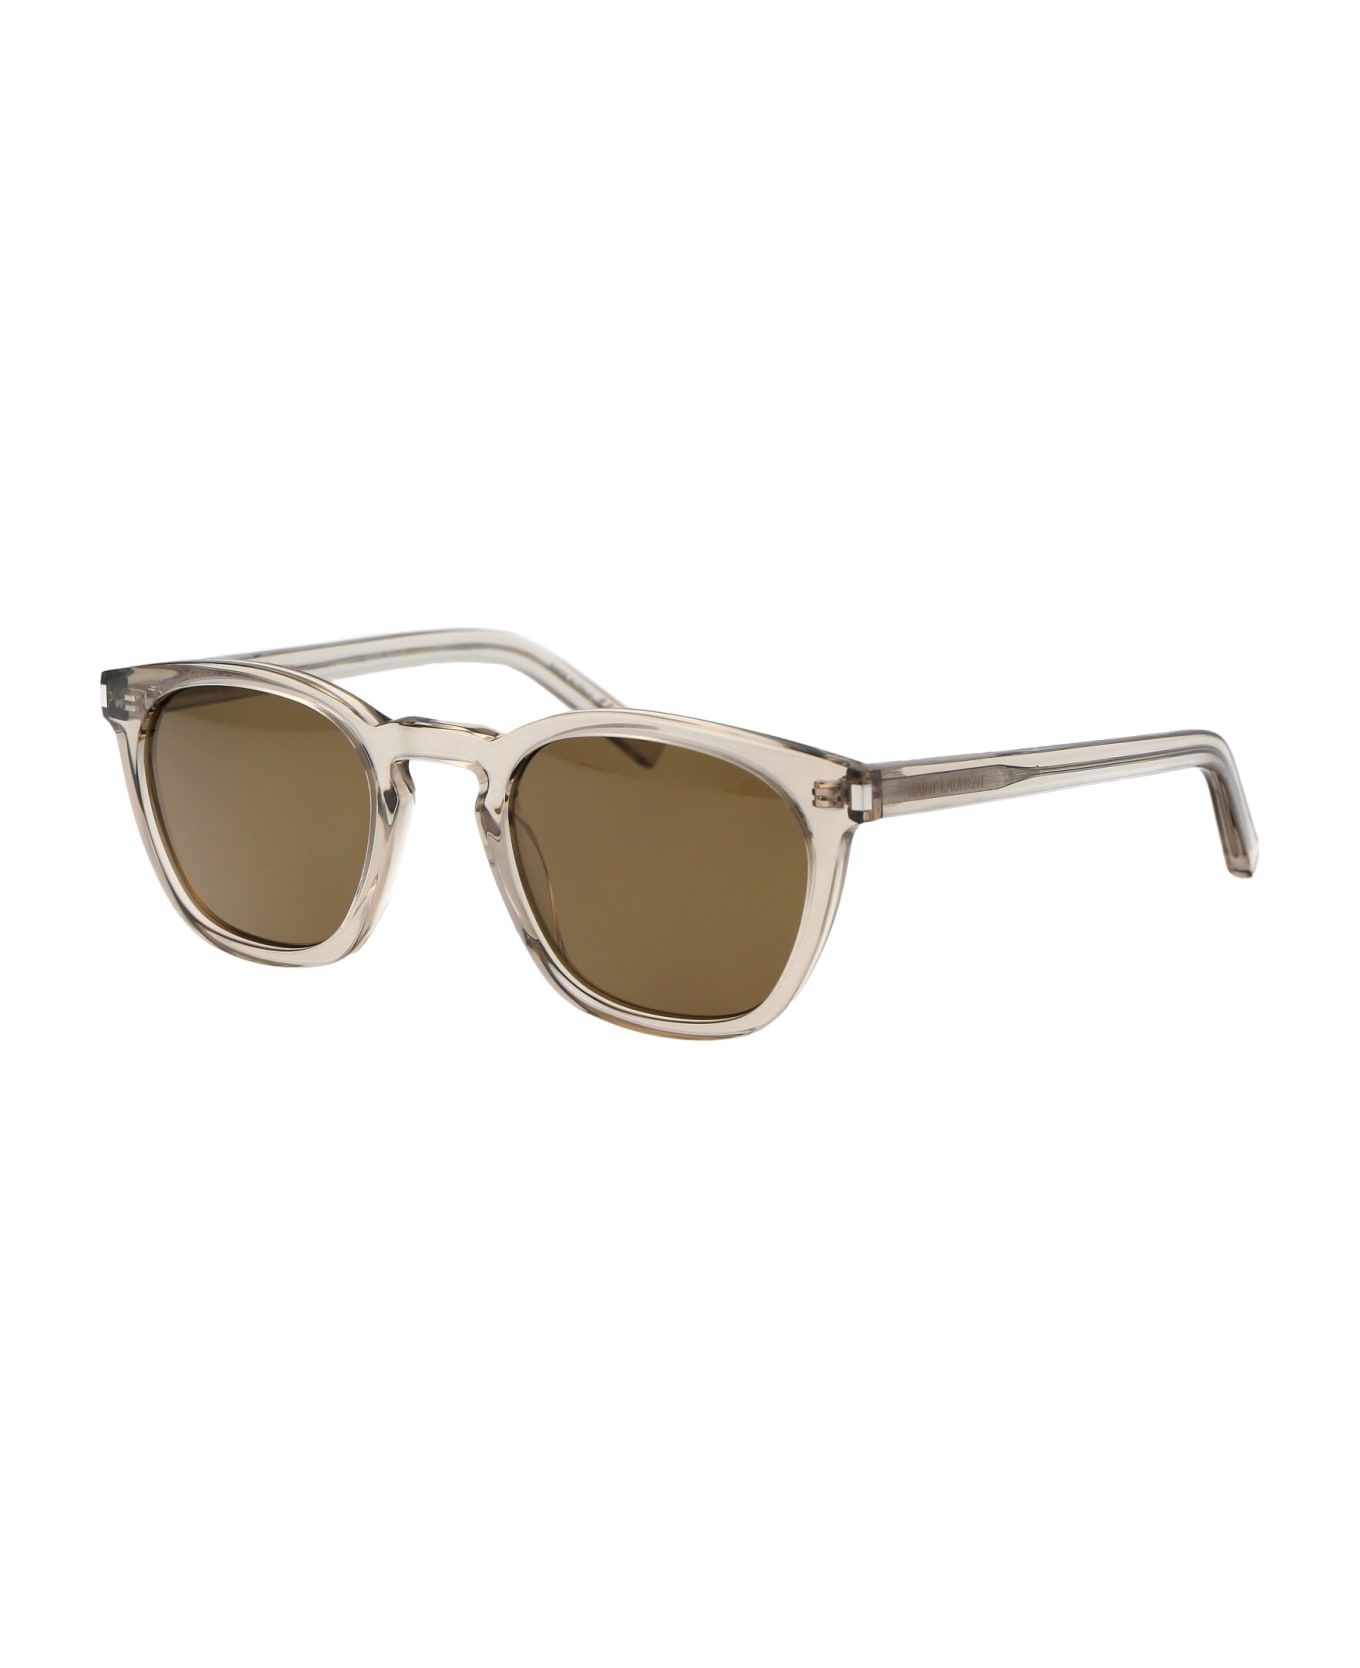 Saint Laurent Eyewear Sl 28 Sunglasses - 047 BEIGE BEIGE BROWN